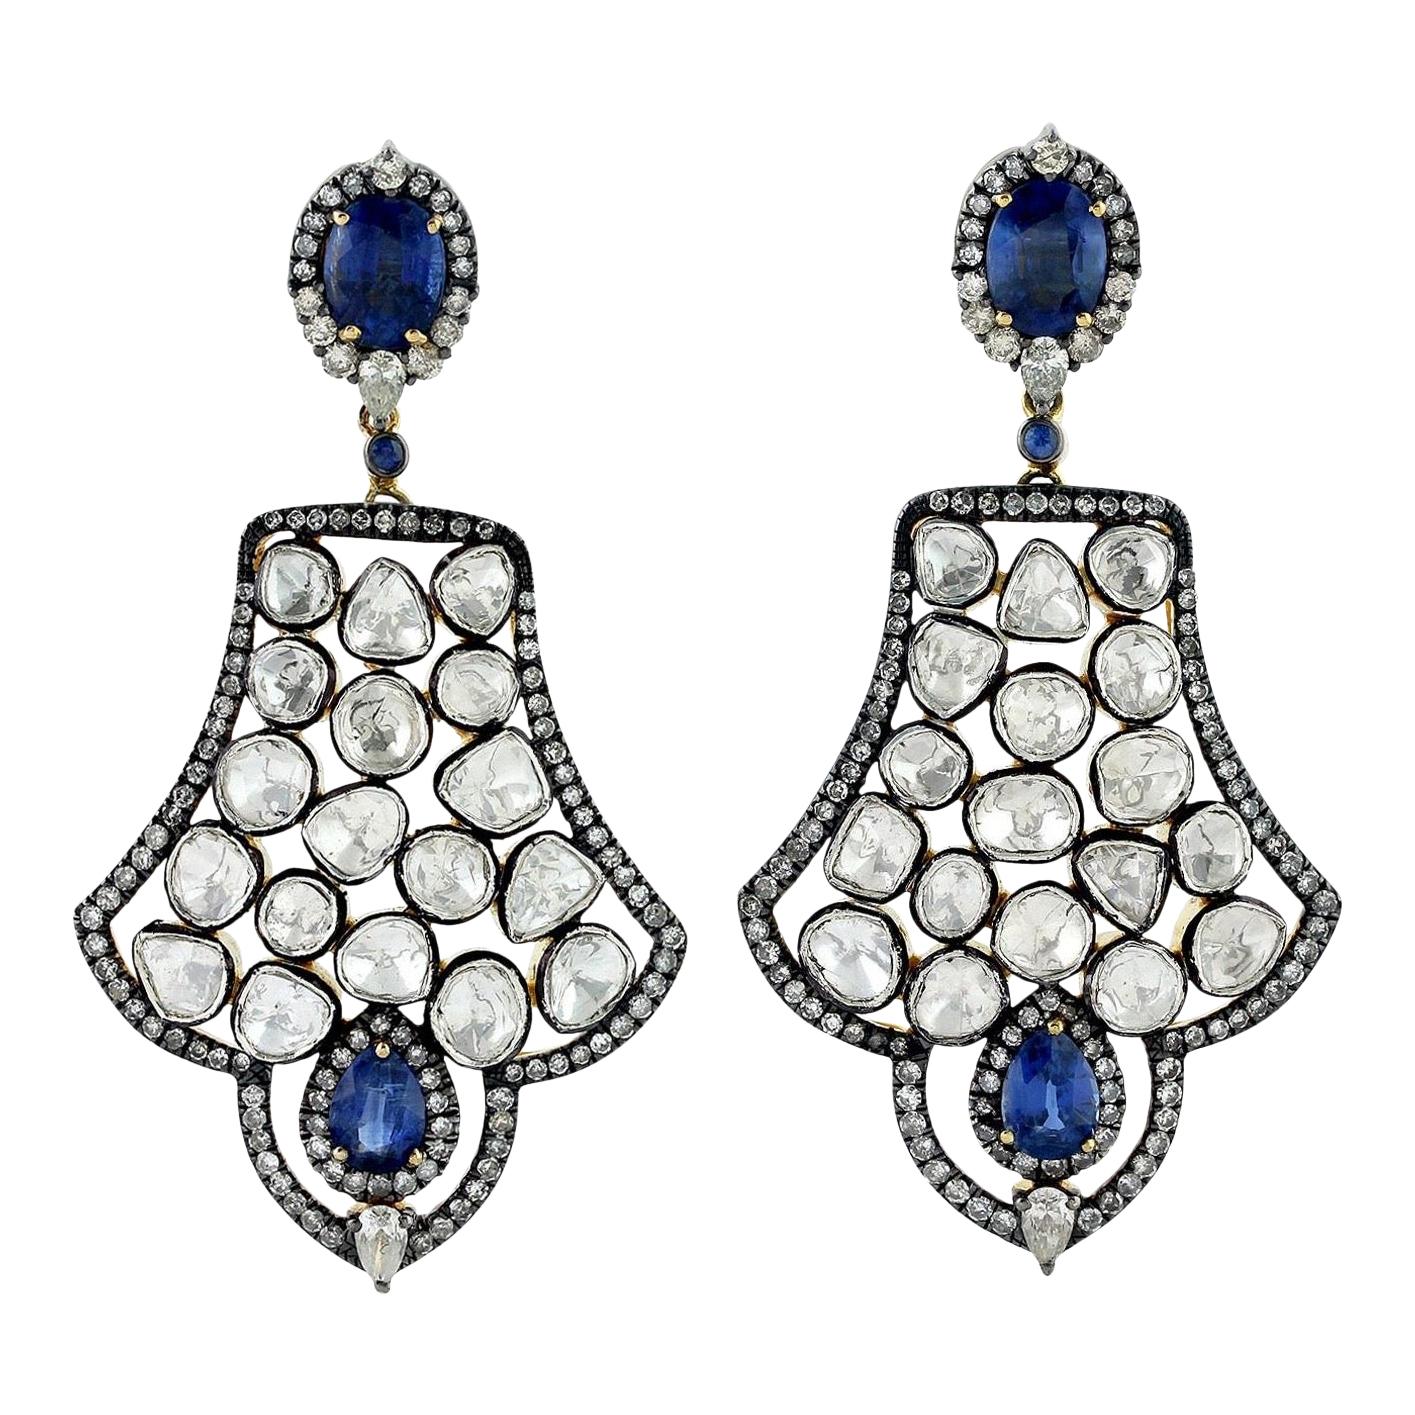 Antique Style 5.68 Carat Kyanite Rose Cut Diamond Earrings